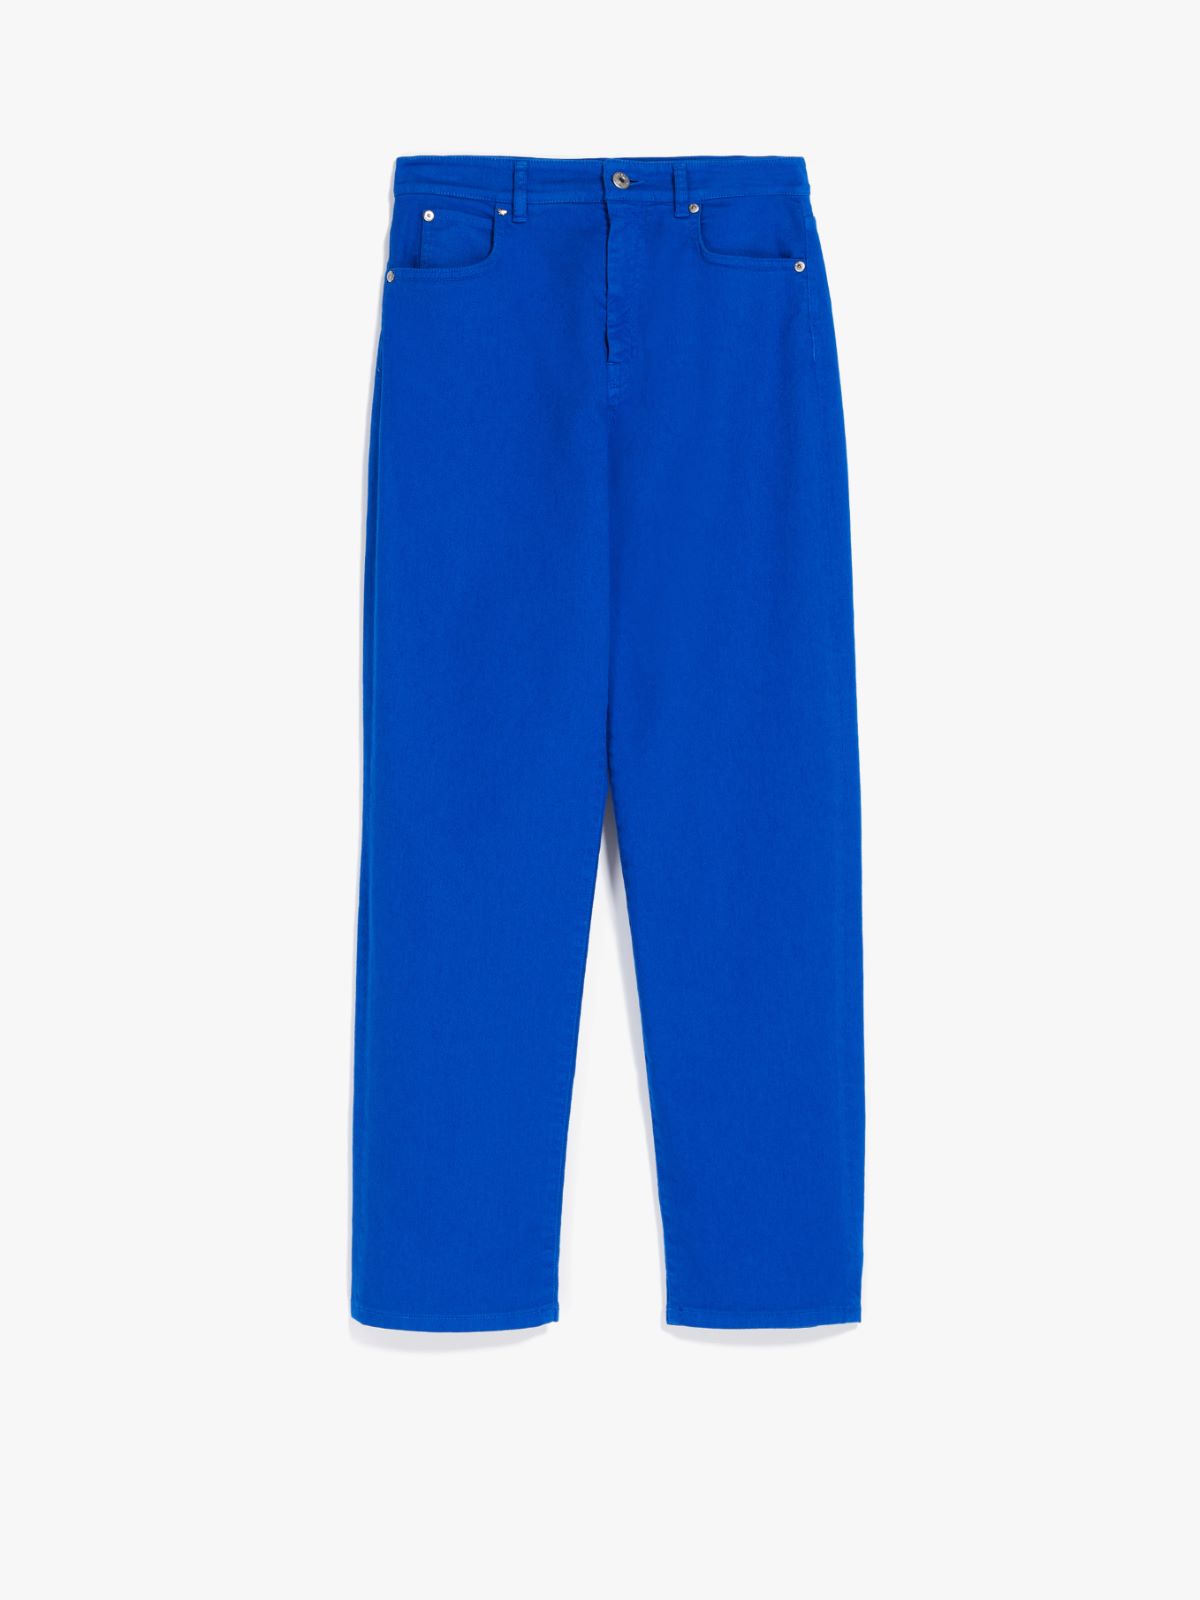 Cotton trousers - CORNFLOWER BLUE - Weekend Max Mara - 5